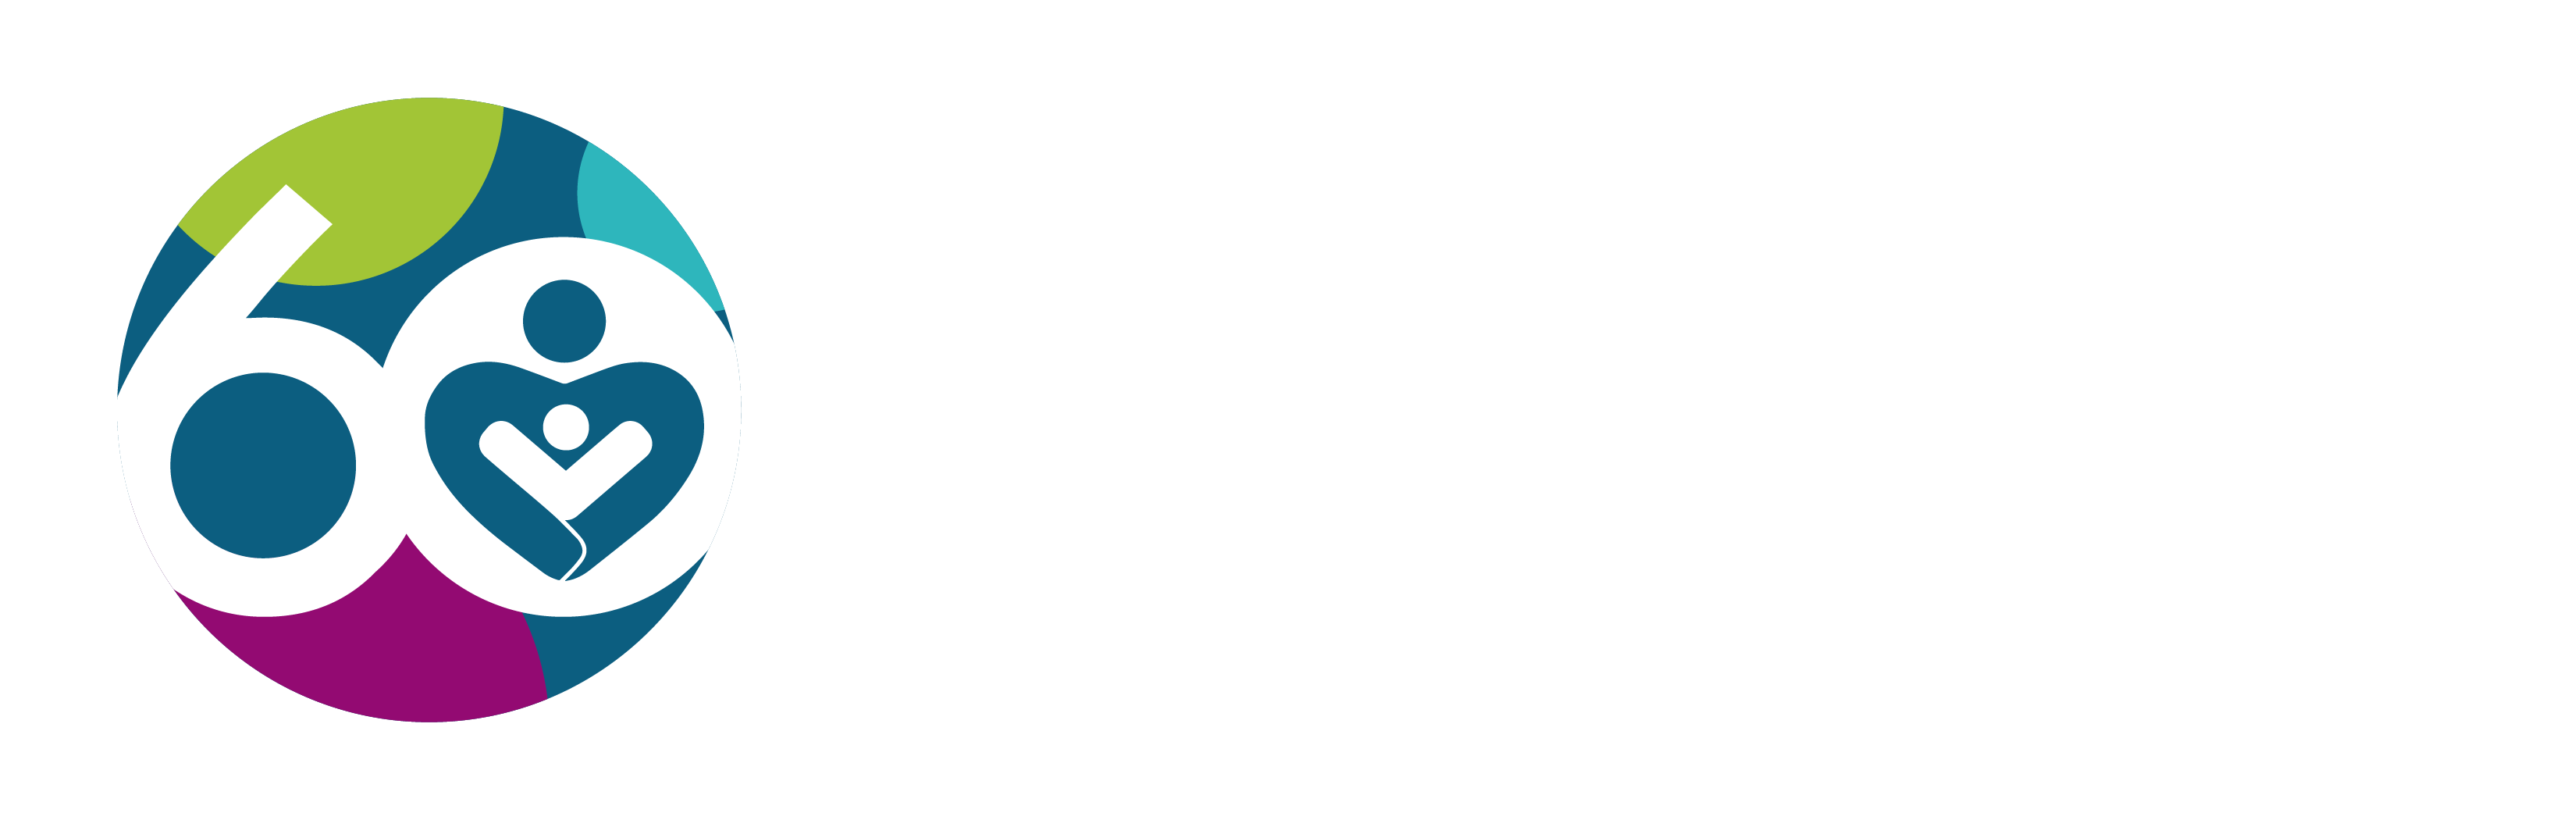 White Holly Ridge Center text based logo.